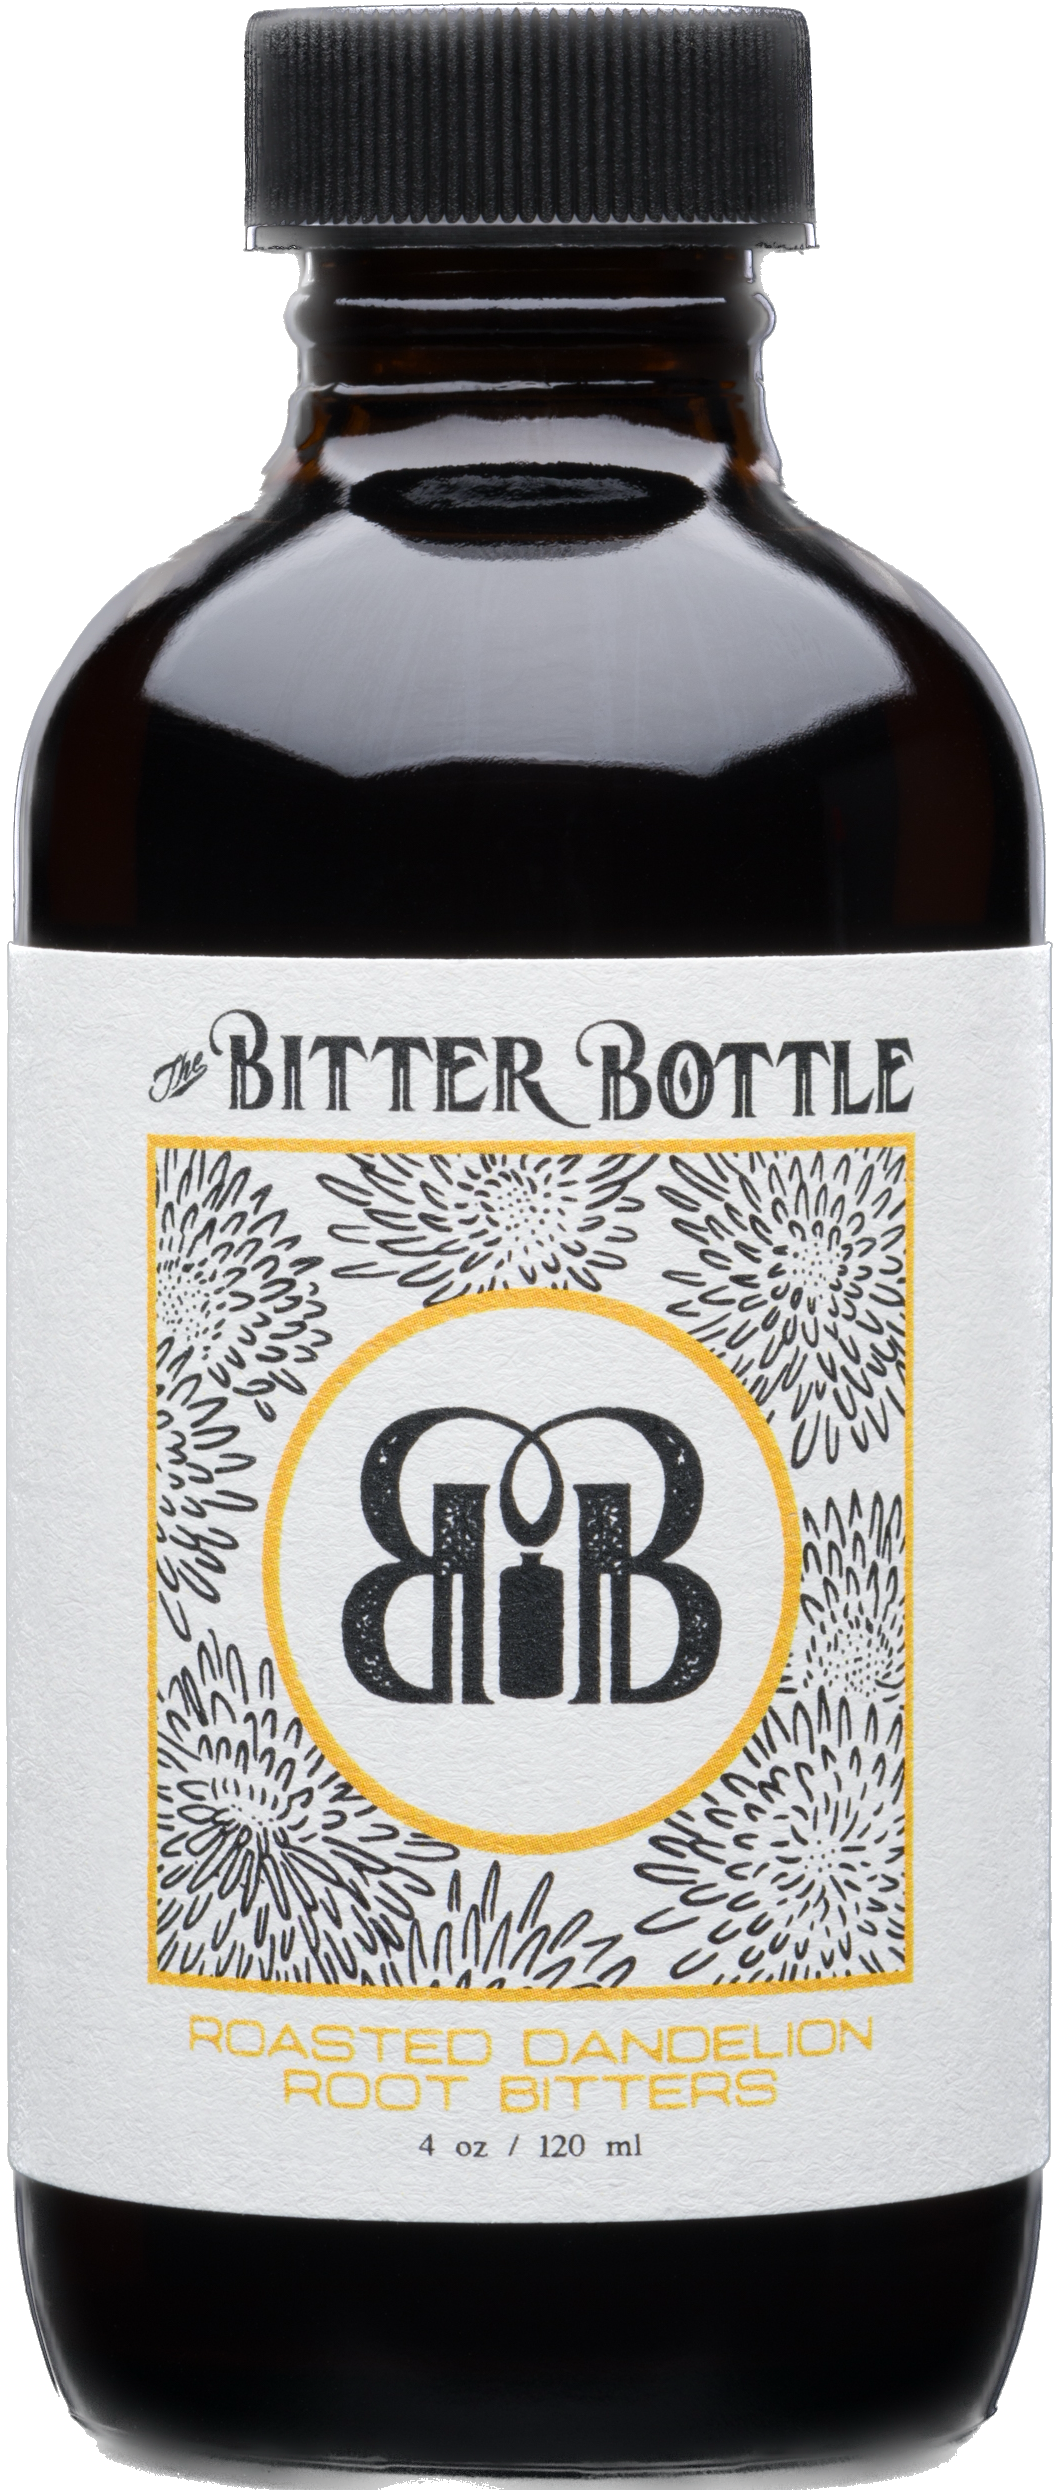 The Bitter Bottle: Roasted Dandelion Root Bitters